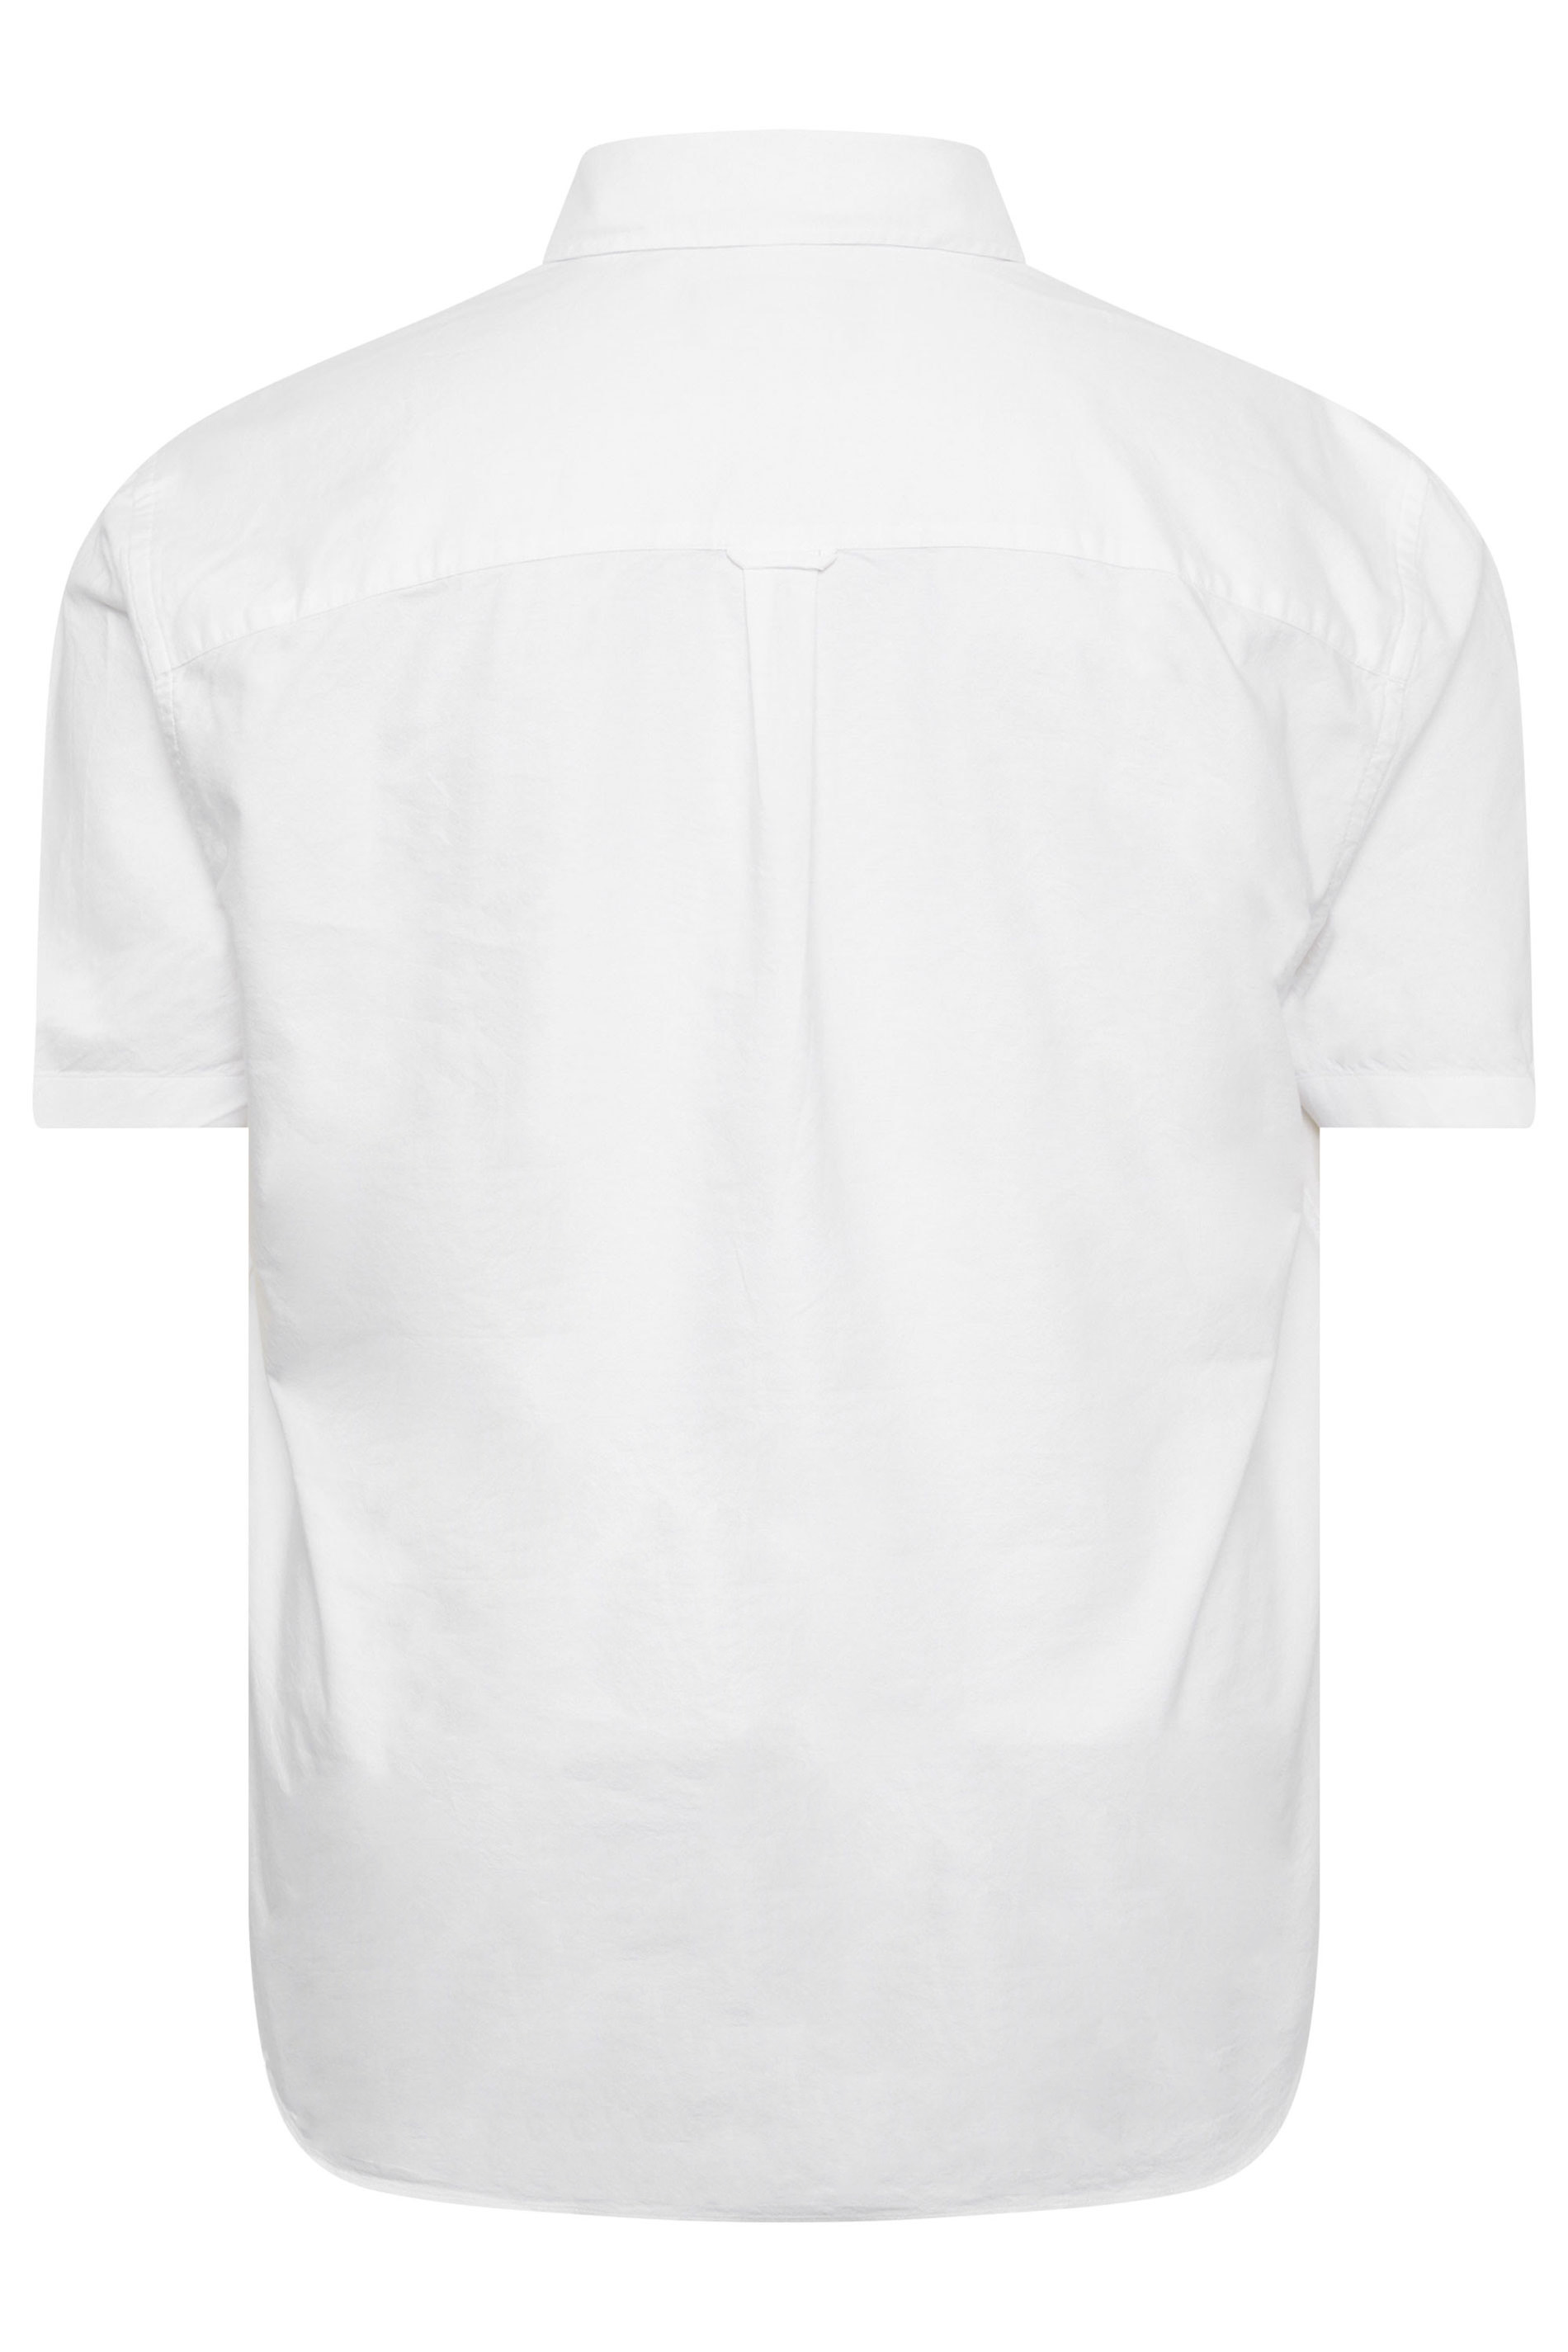 LYLE & SCOTT Big & Tall White Short Sleeve Oxford Shirt | BadRhino 3